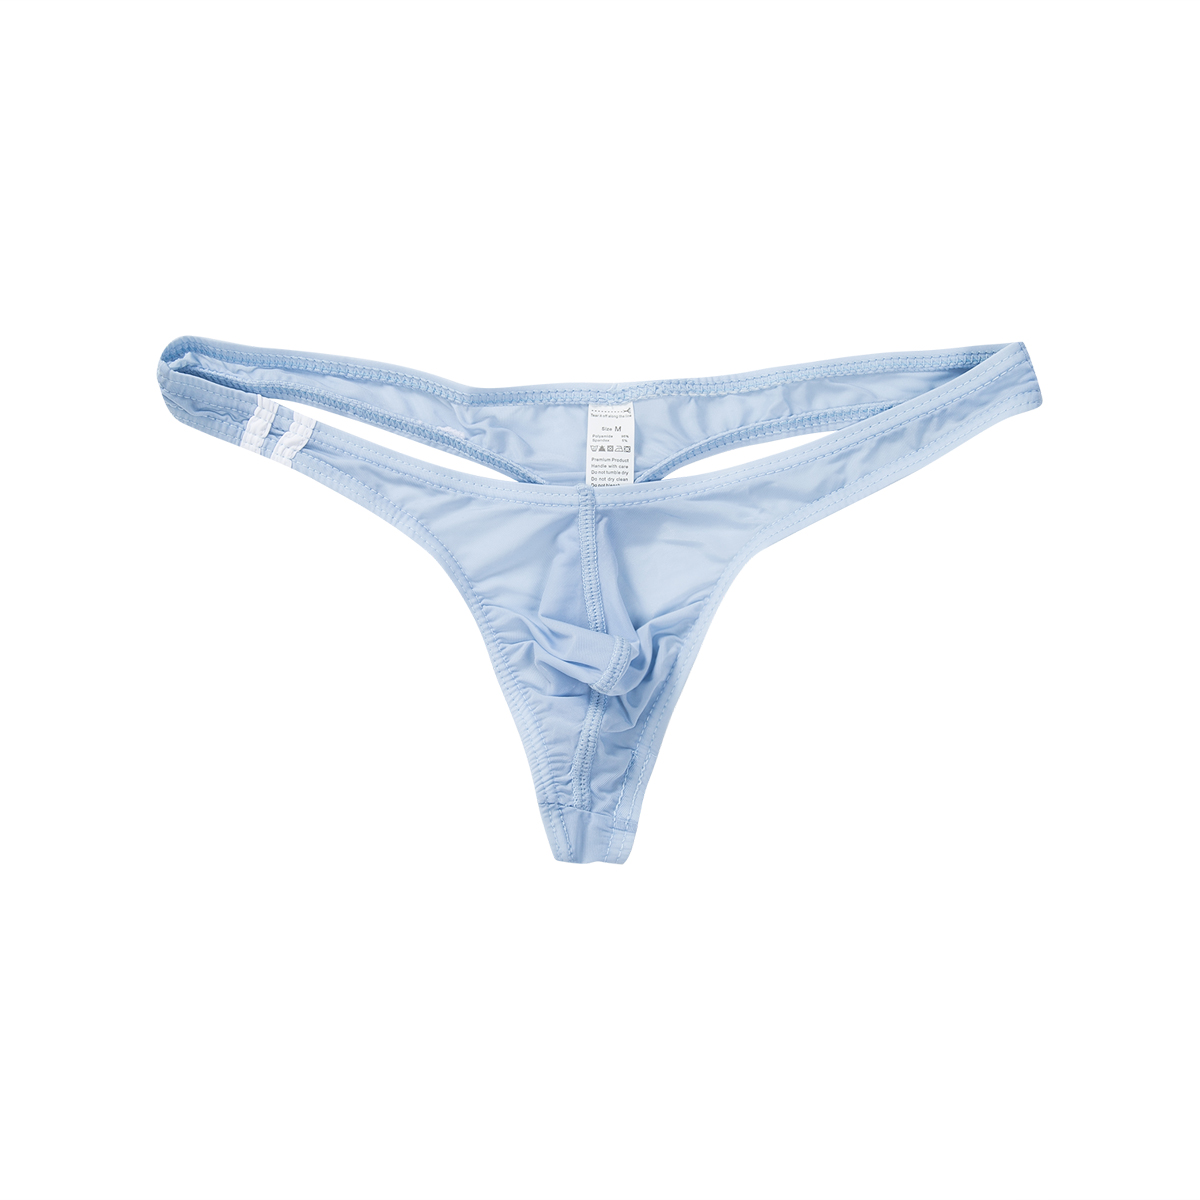 Men's Underwear Bikini G-strings Lingerie Smooth Briefs Tangas ...